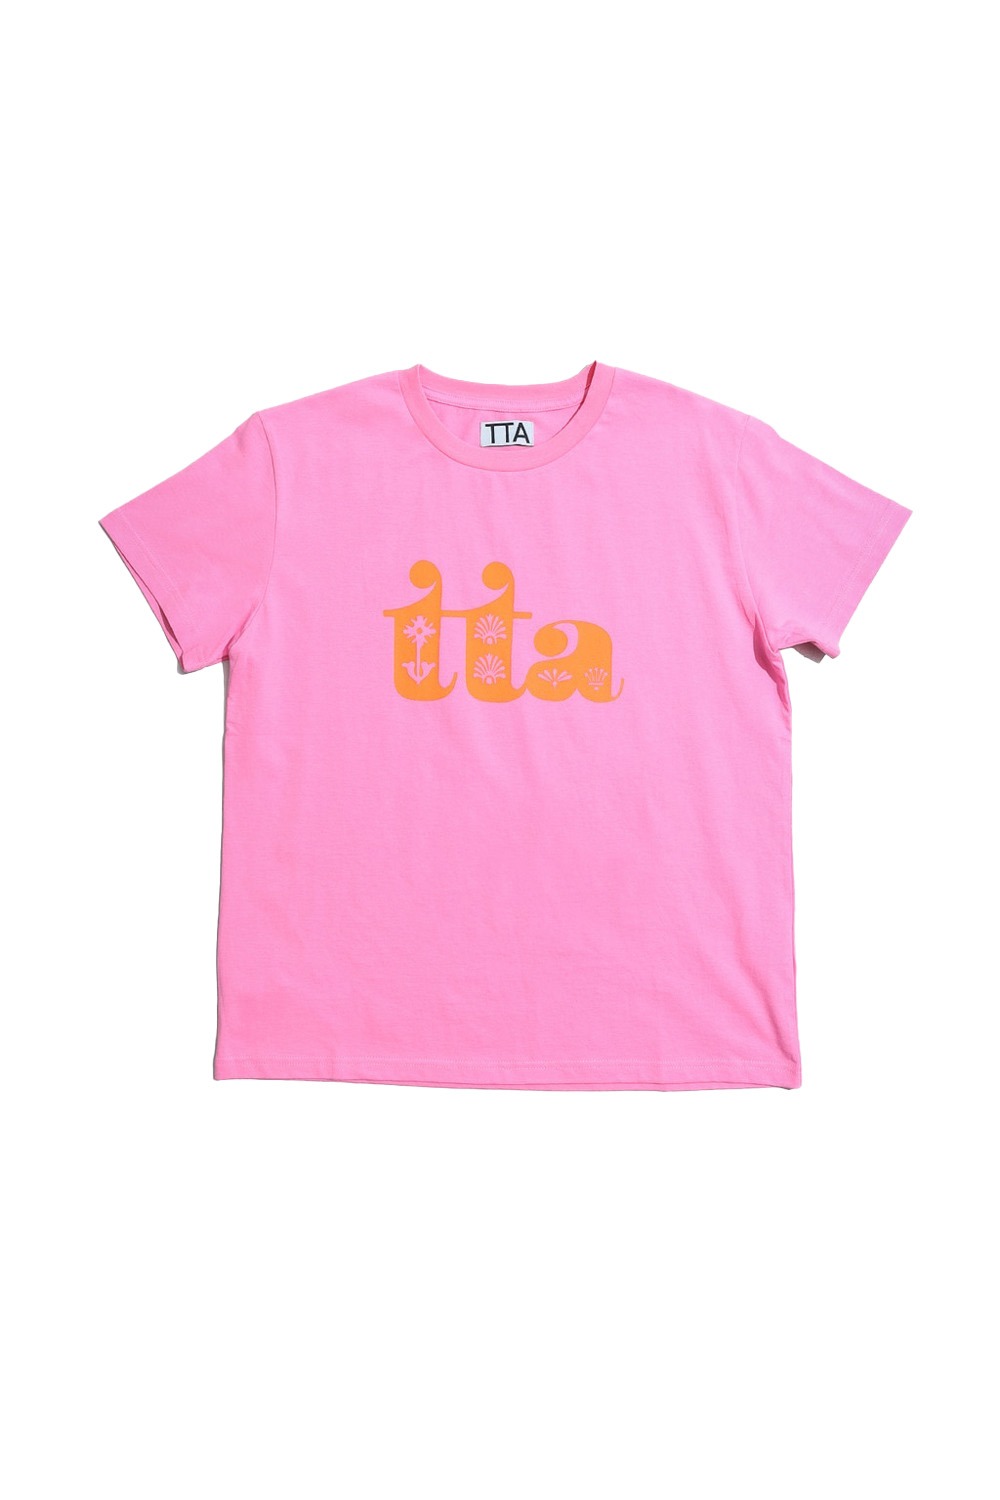 TTA 가든 S/S 티셔츠 (핑크) - 리치즈 RICHEZ